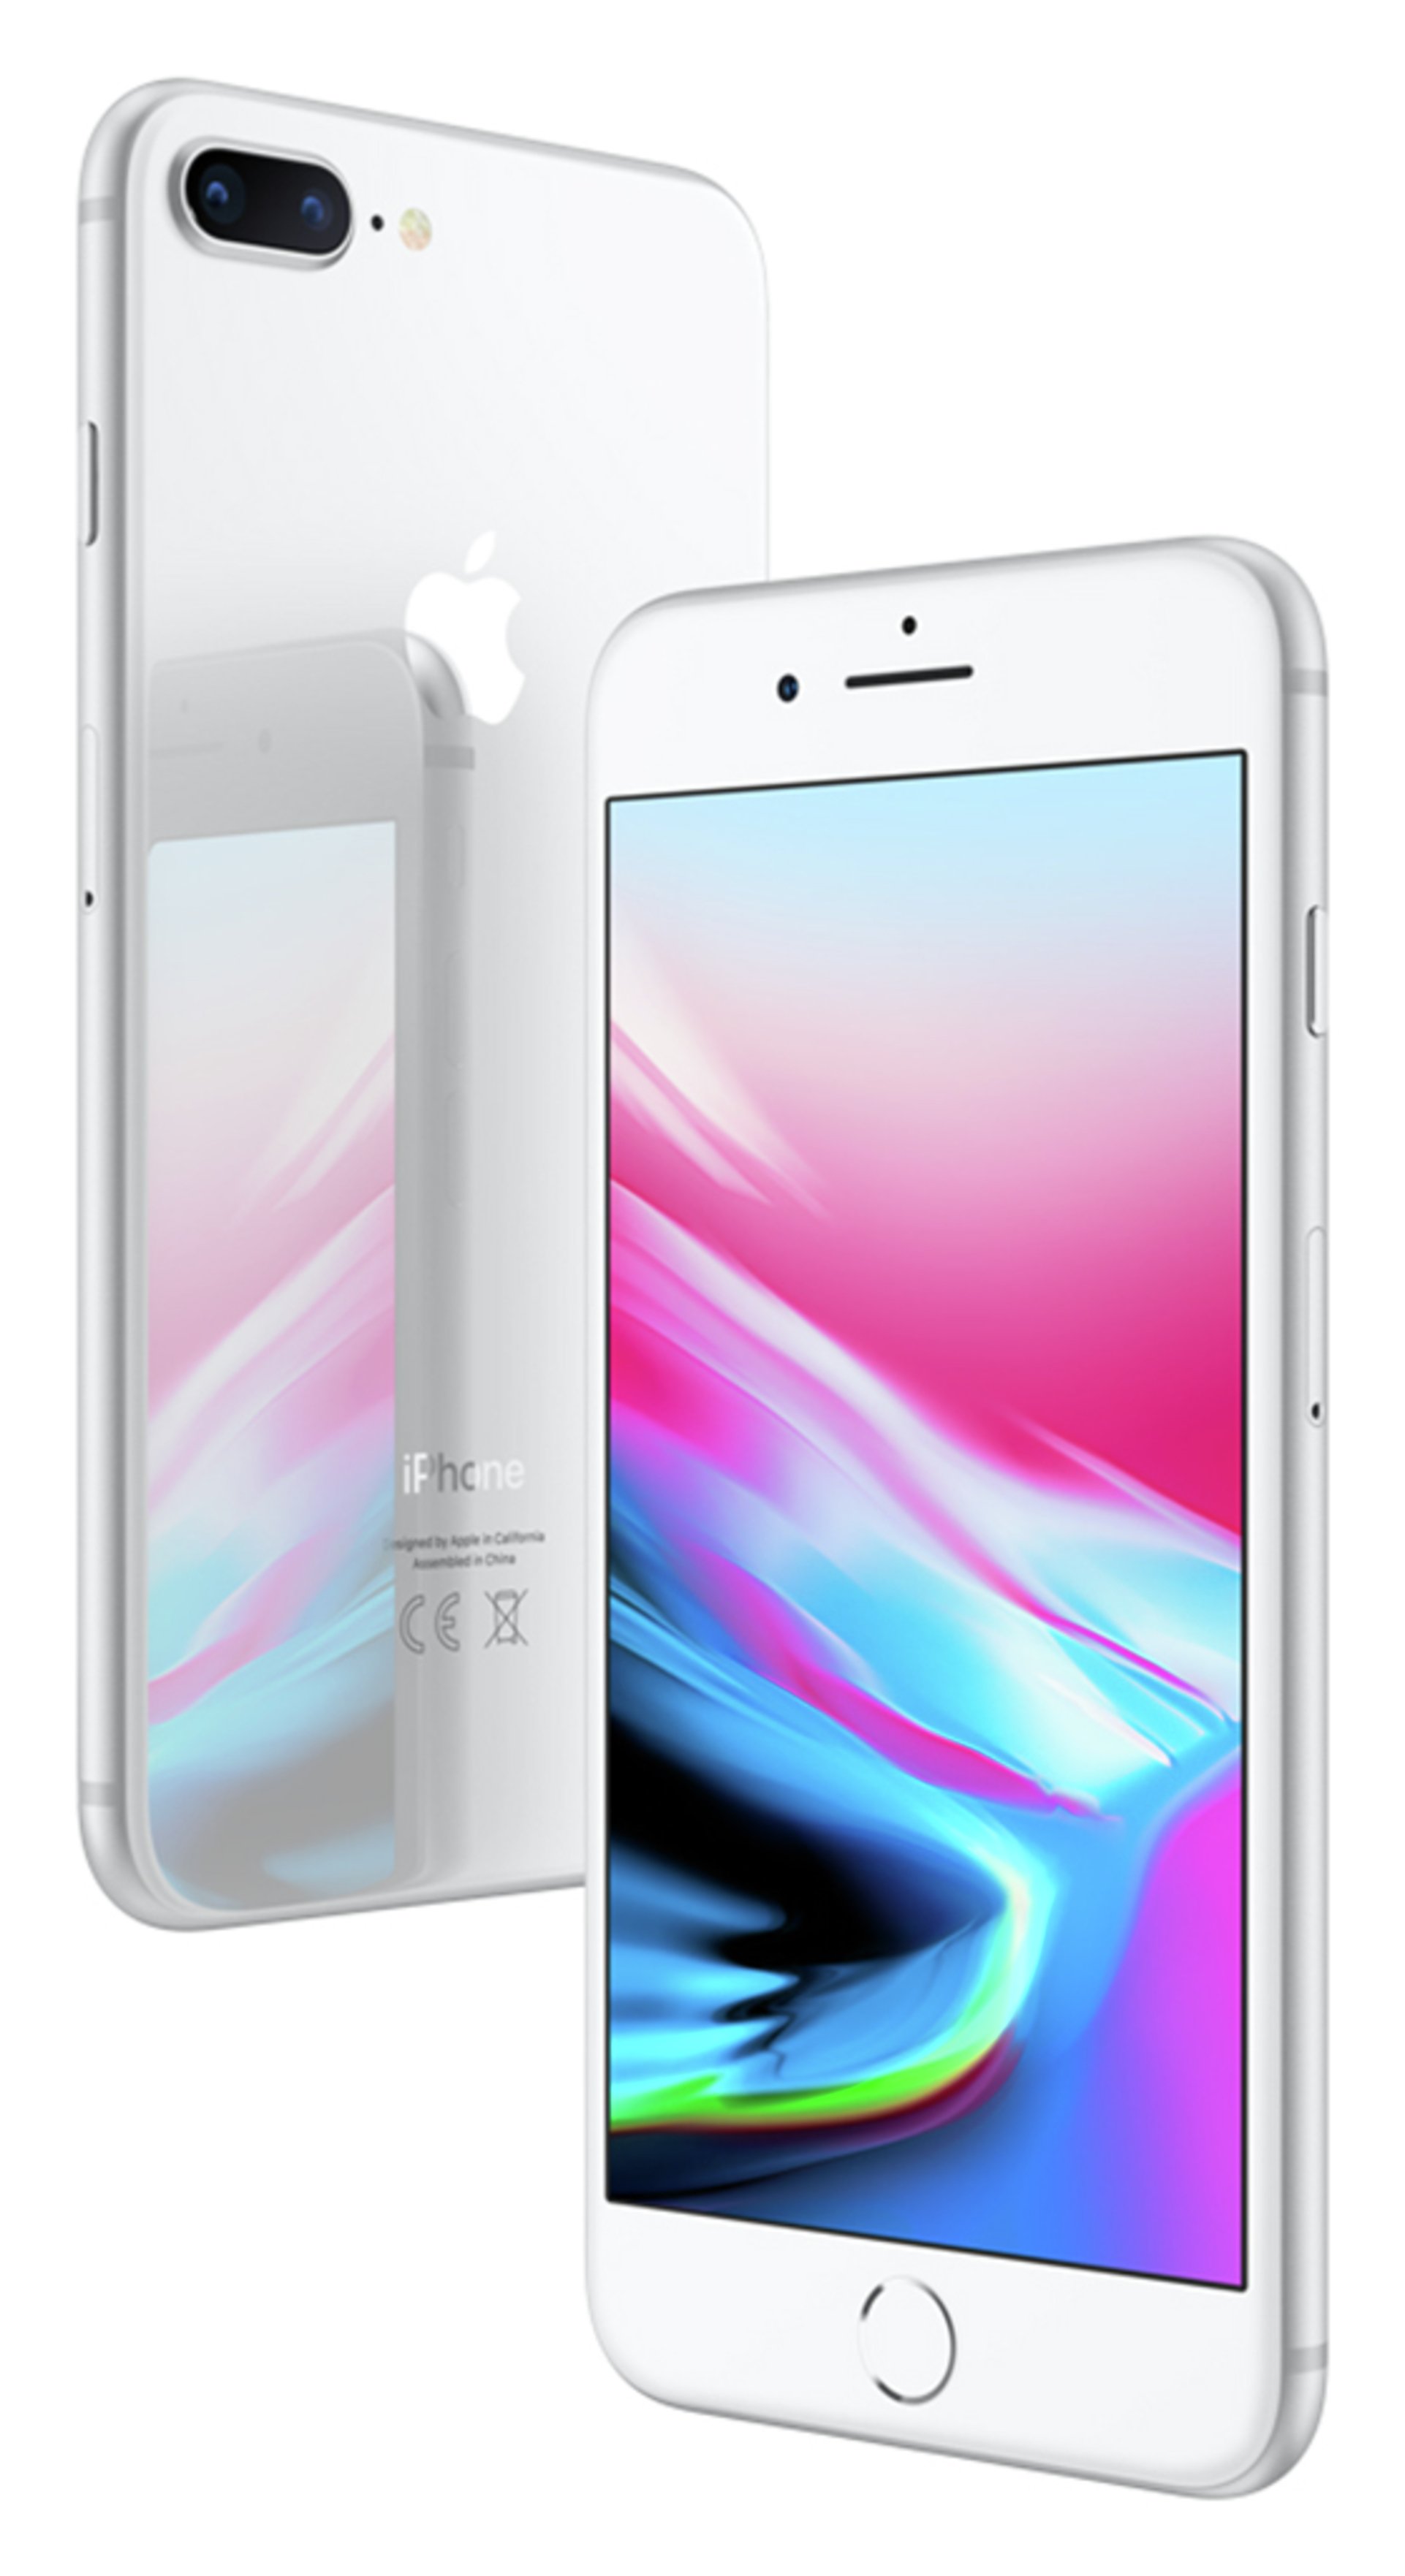 SIM Free iPhone 8 Plus 256GB Mobile Phone review